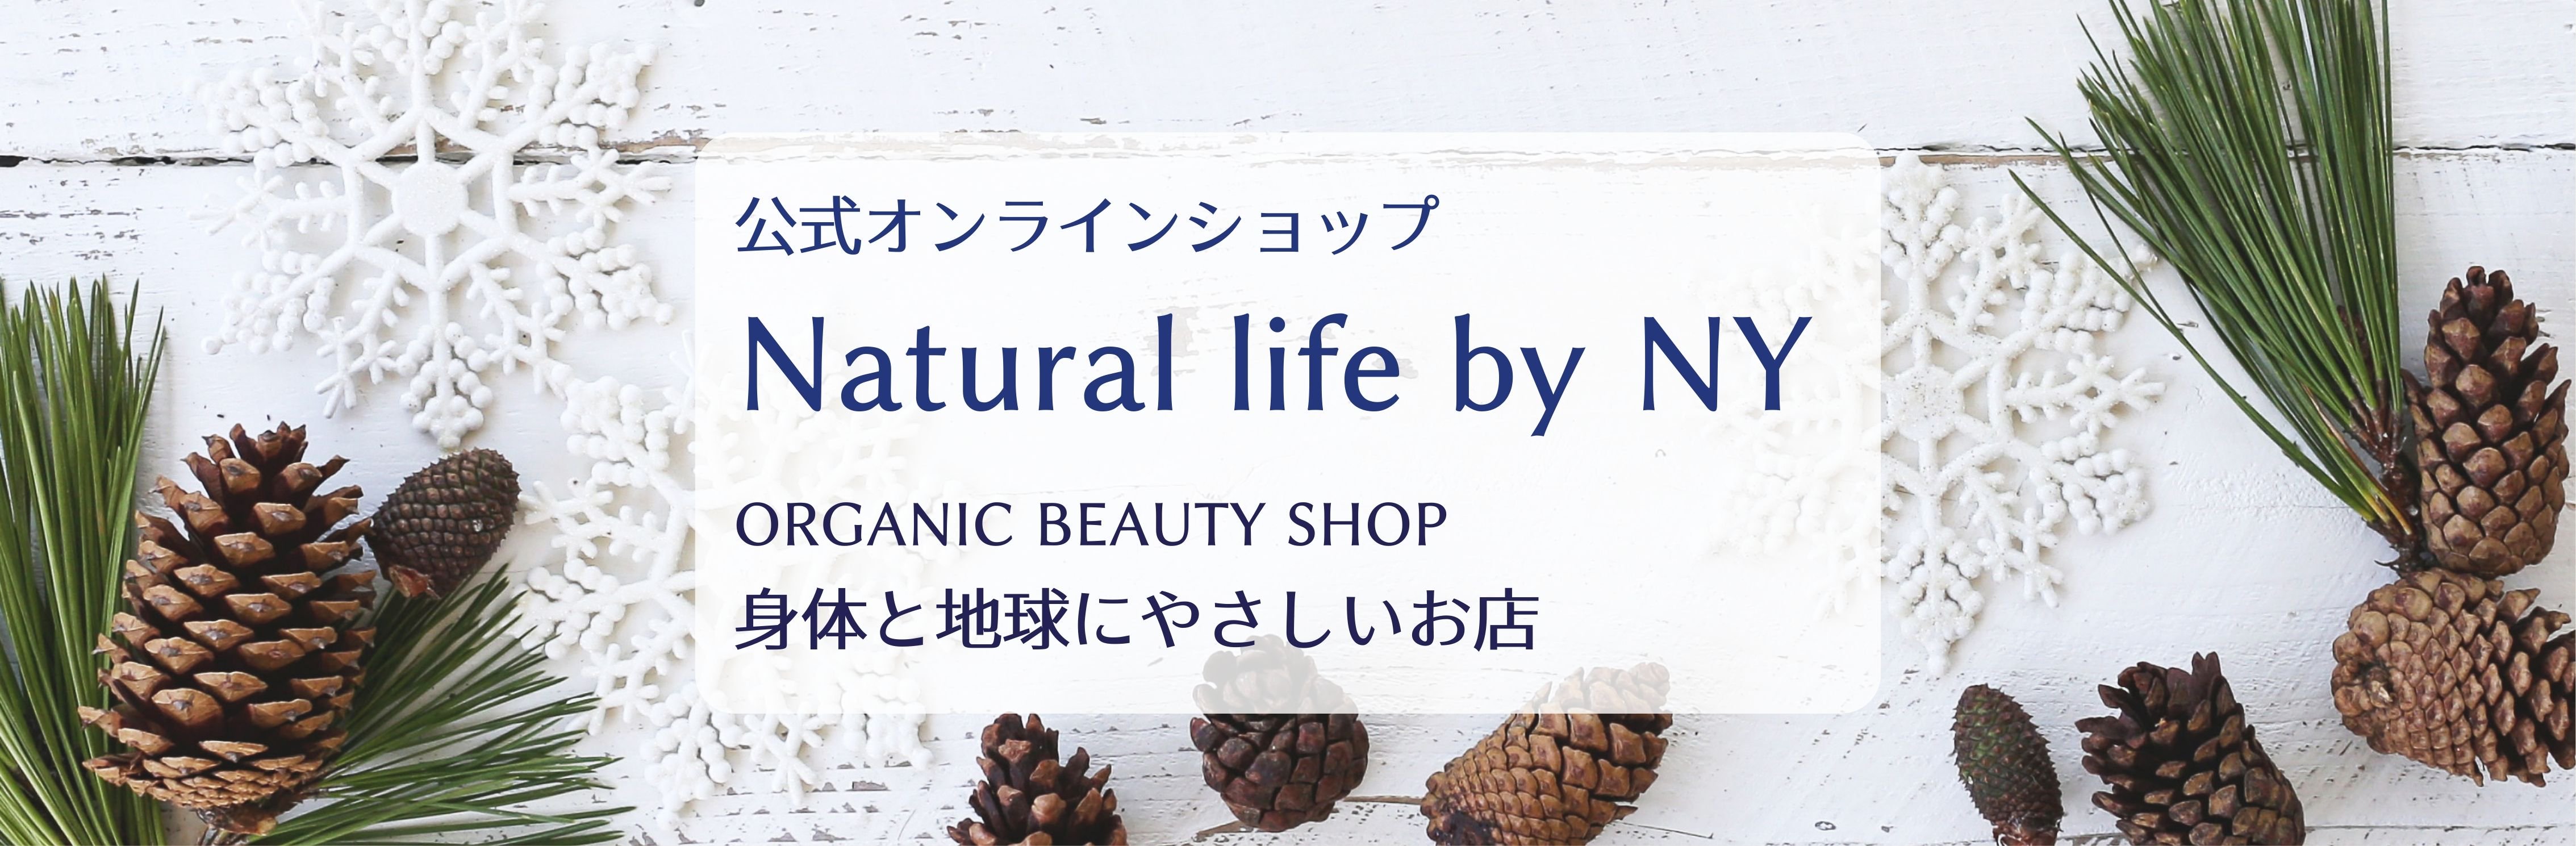 Winter ver [Organic Beauty Select Shop] Natural Life by NY